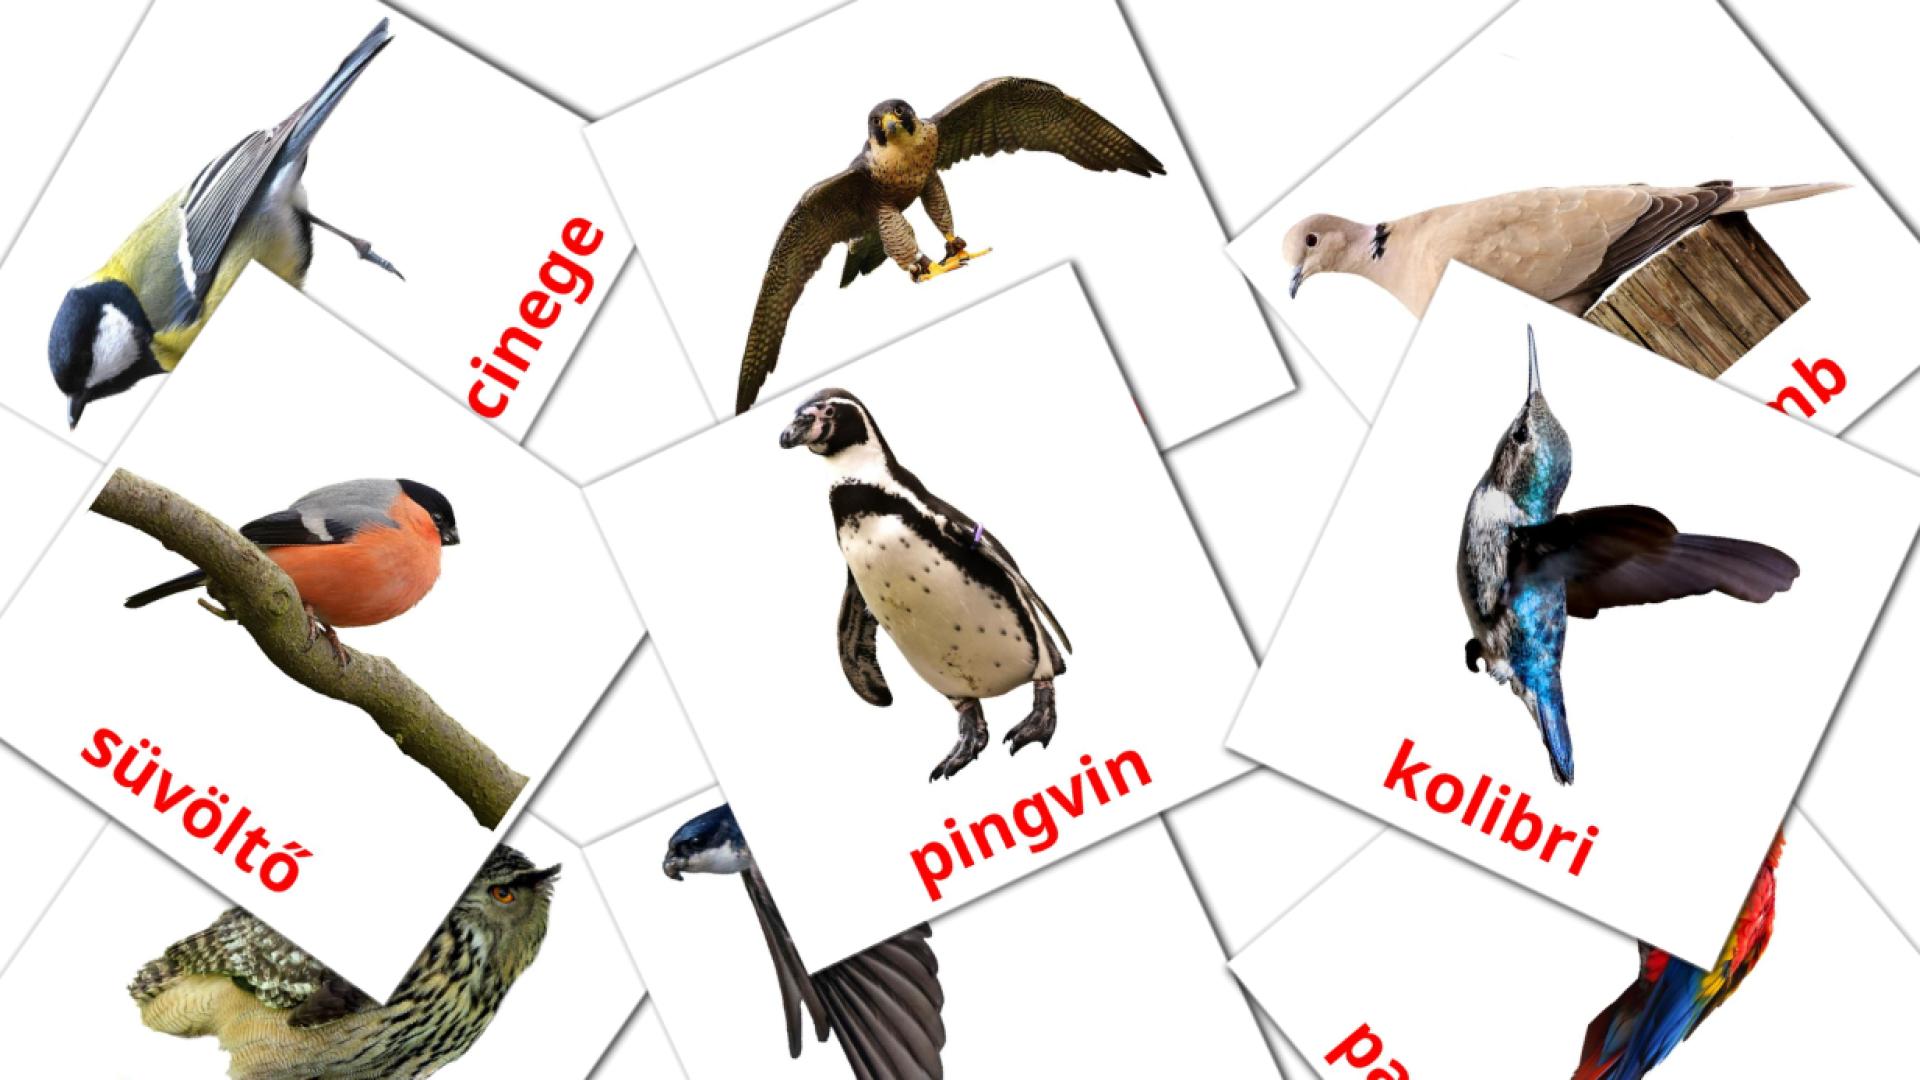 18 Flashcards de Vadon élő madarak